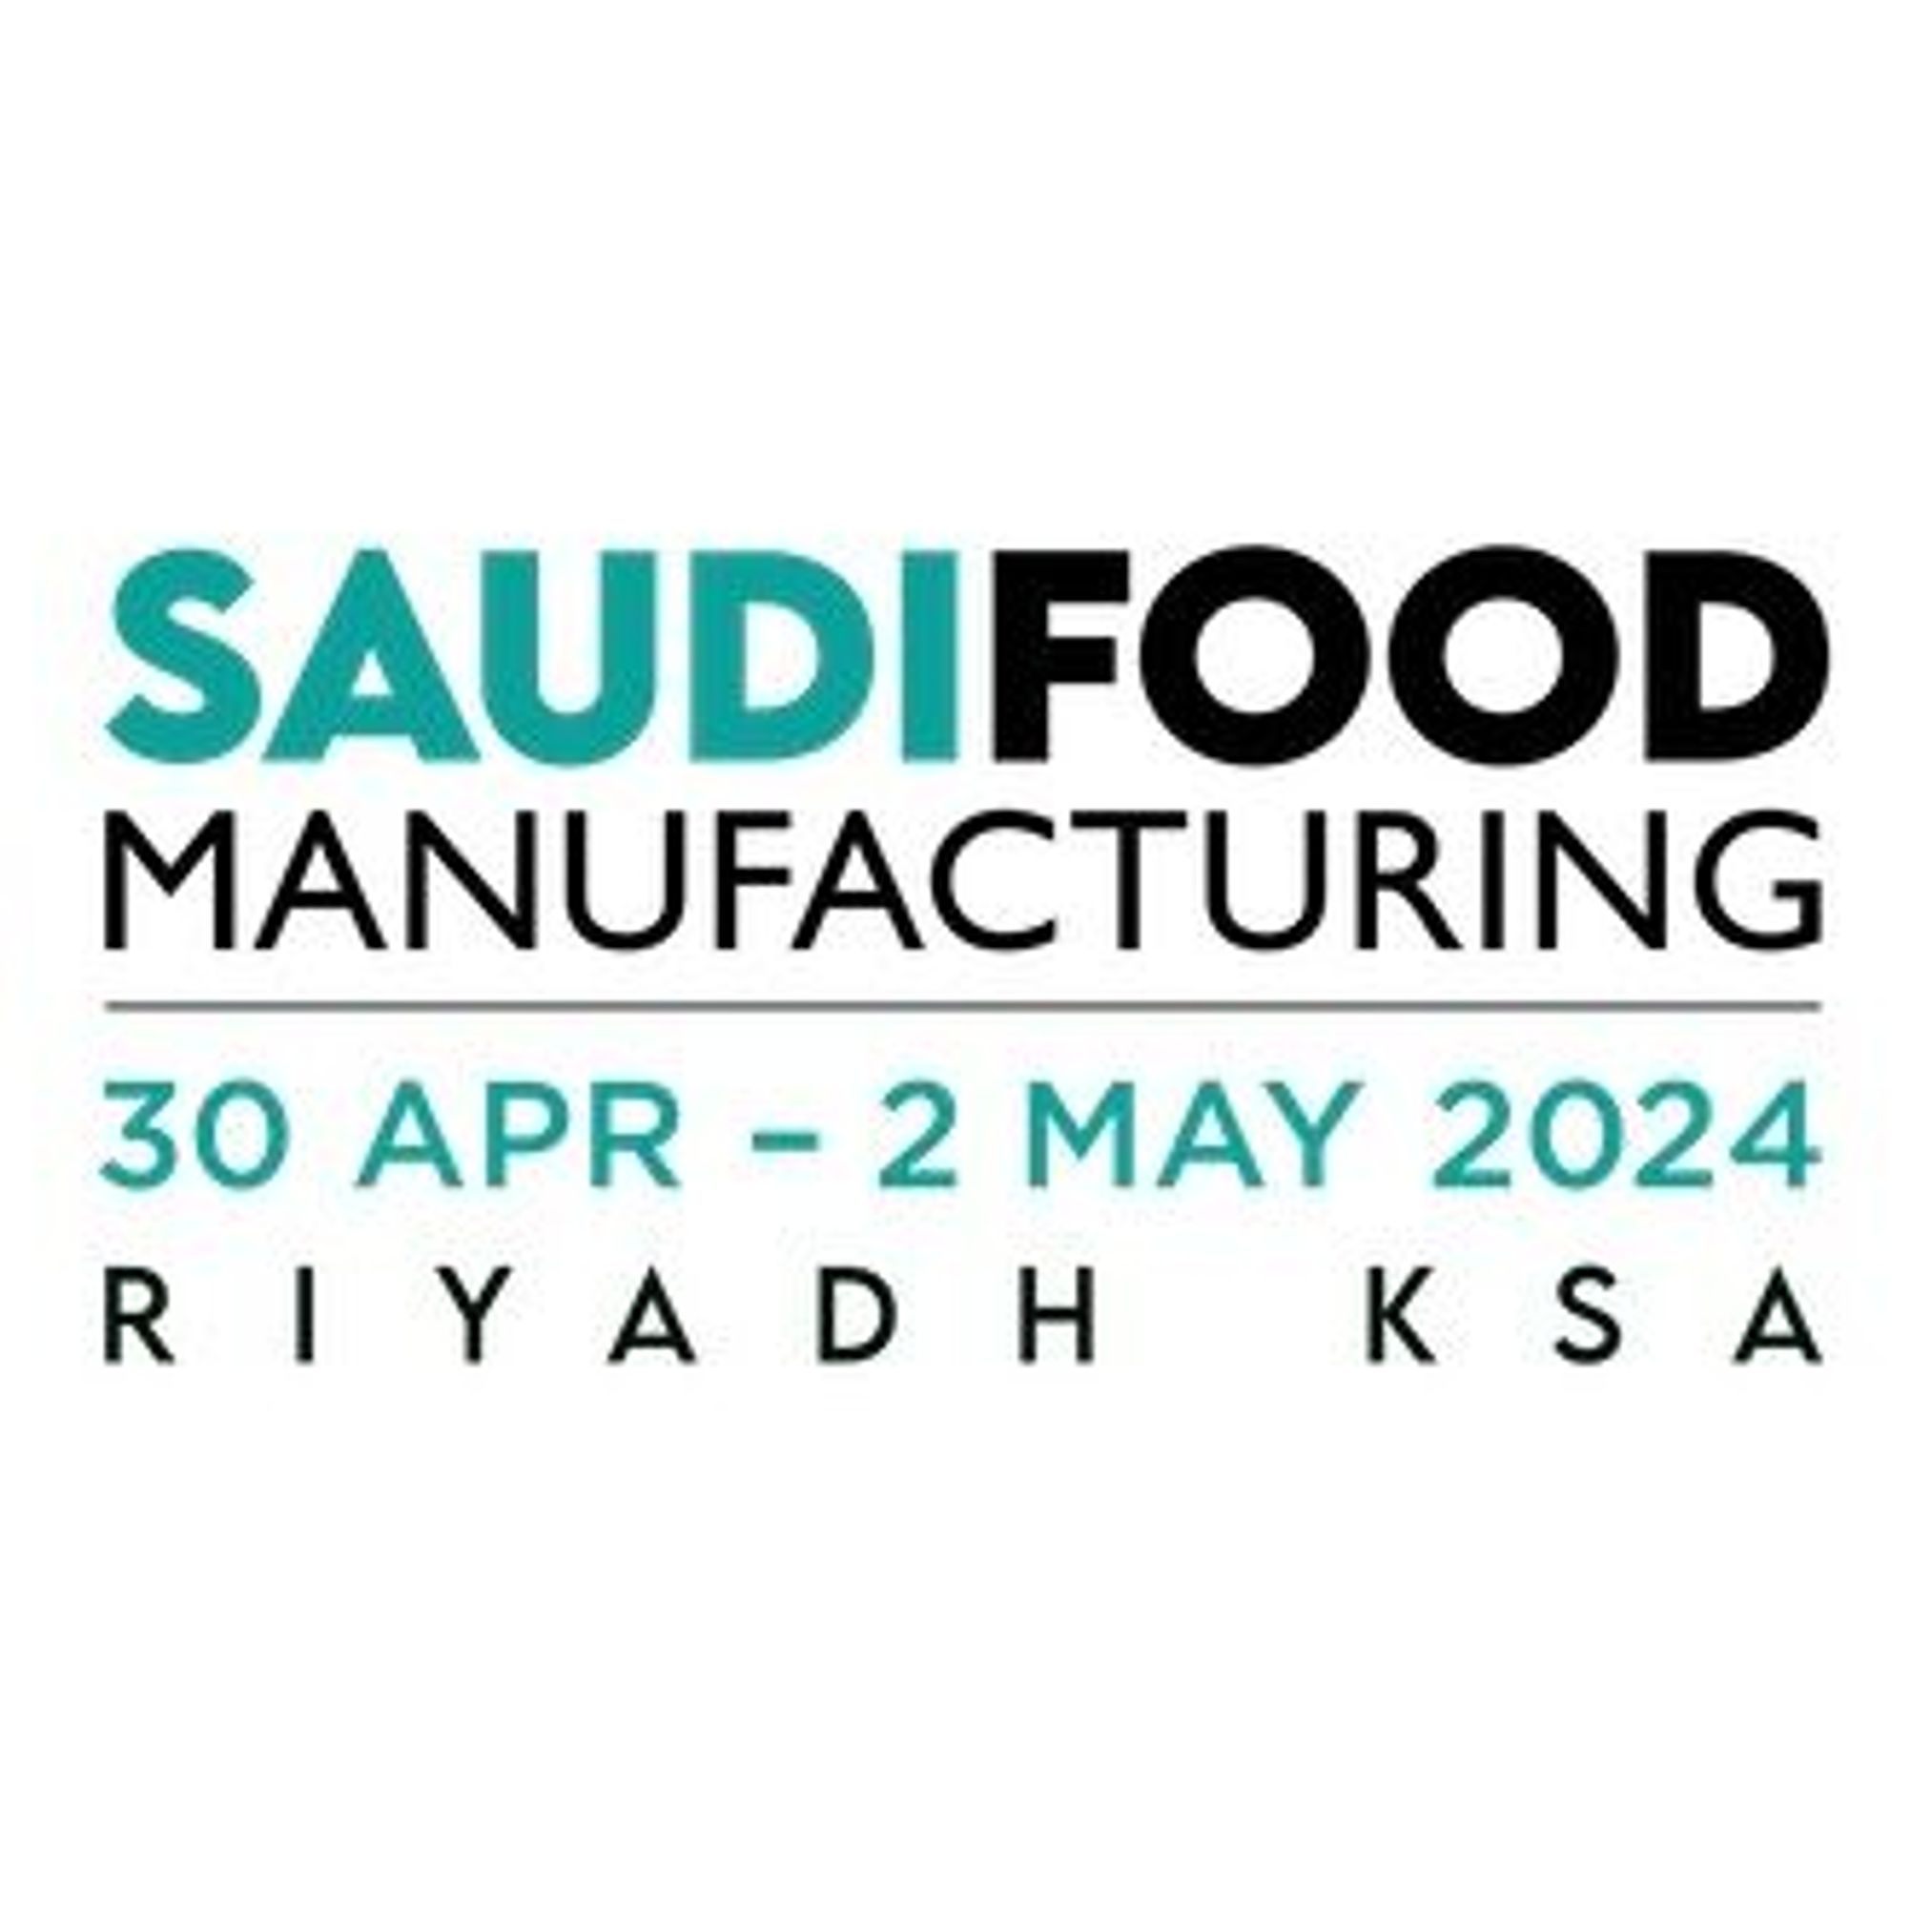 Saudi Food manufacturing